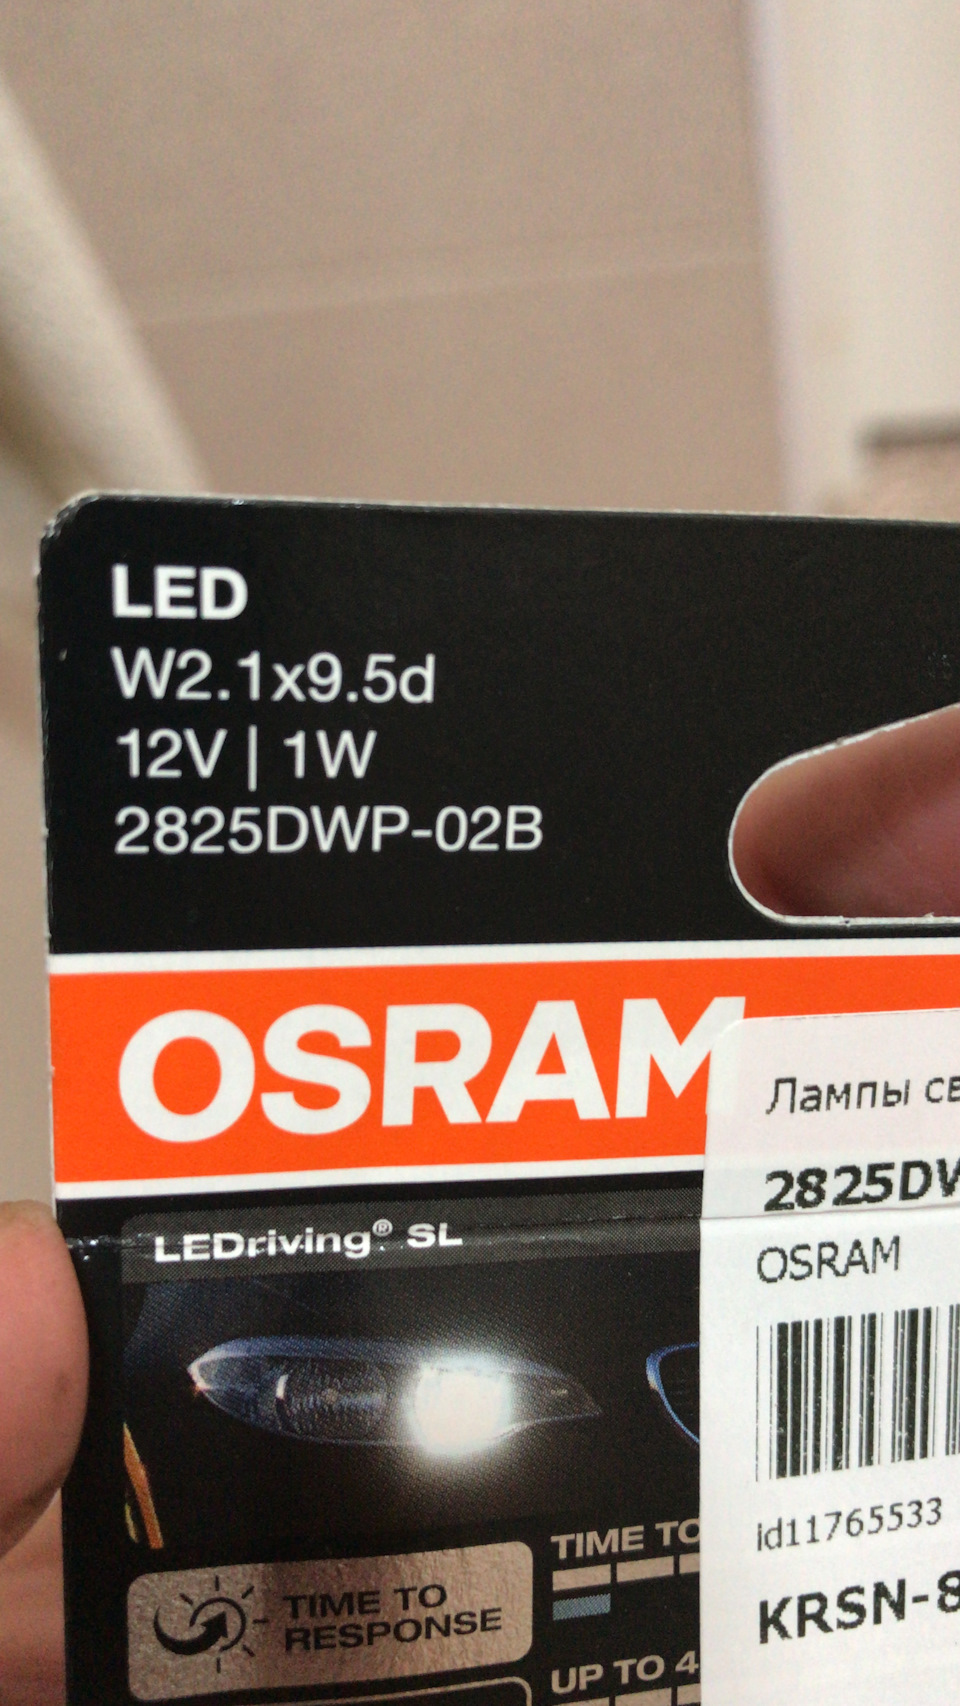 Лампа W5W светодиодная 12V 1W 6000k LEDriving 2шт., Osram, 2825dwp02b ::  Магазин Запчасти для иномарок в Брянске Detali32